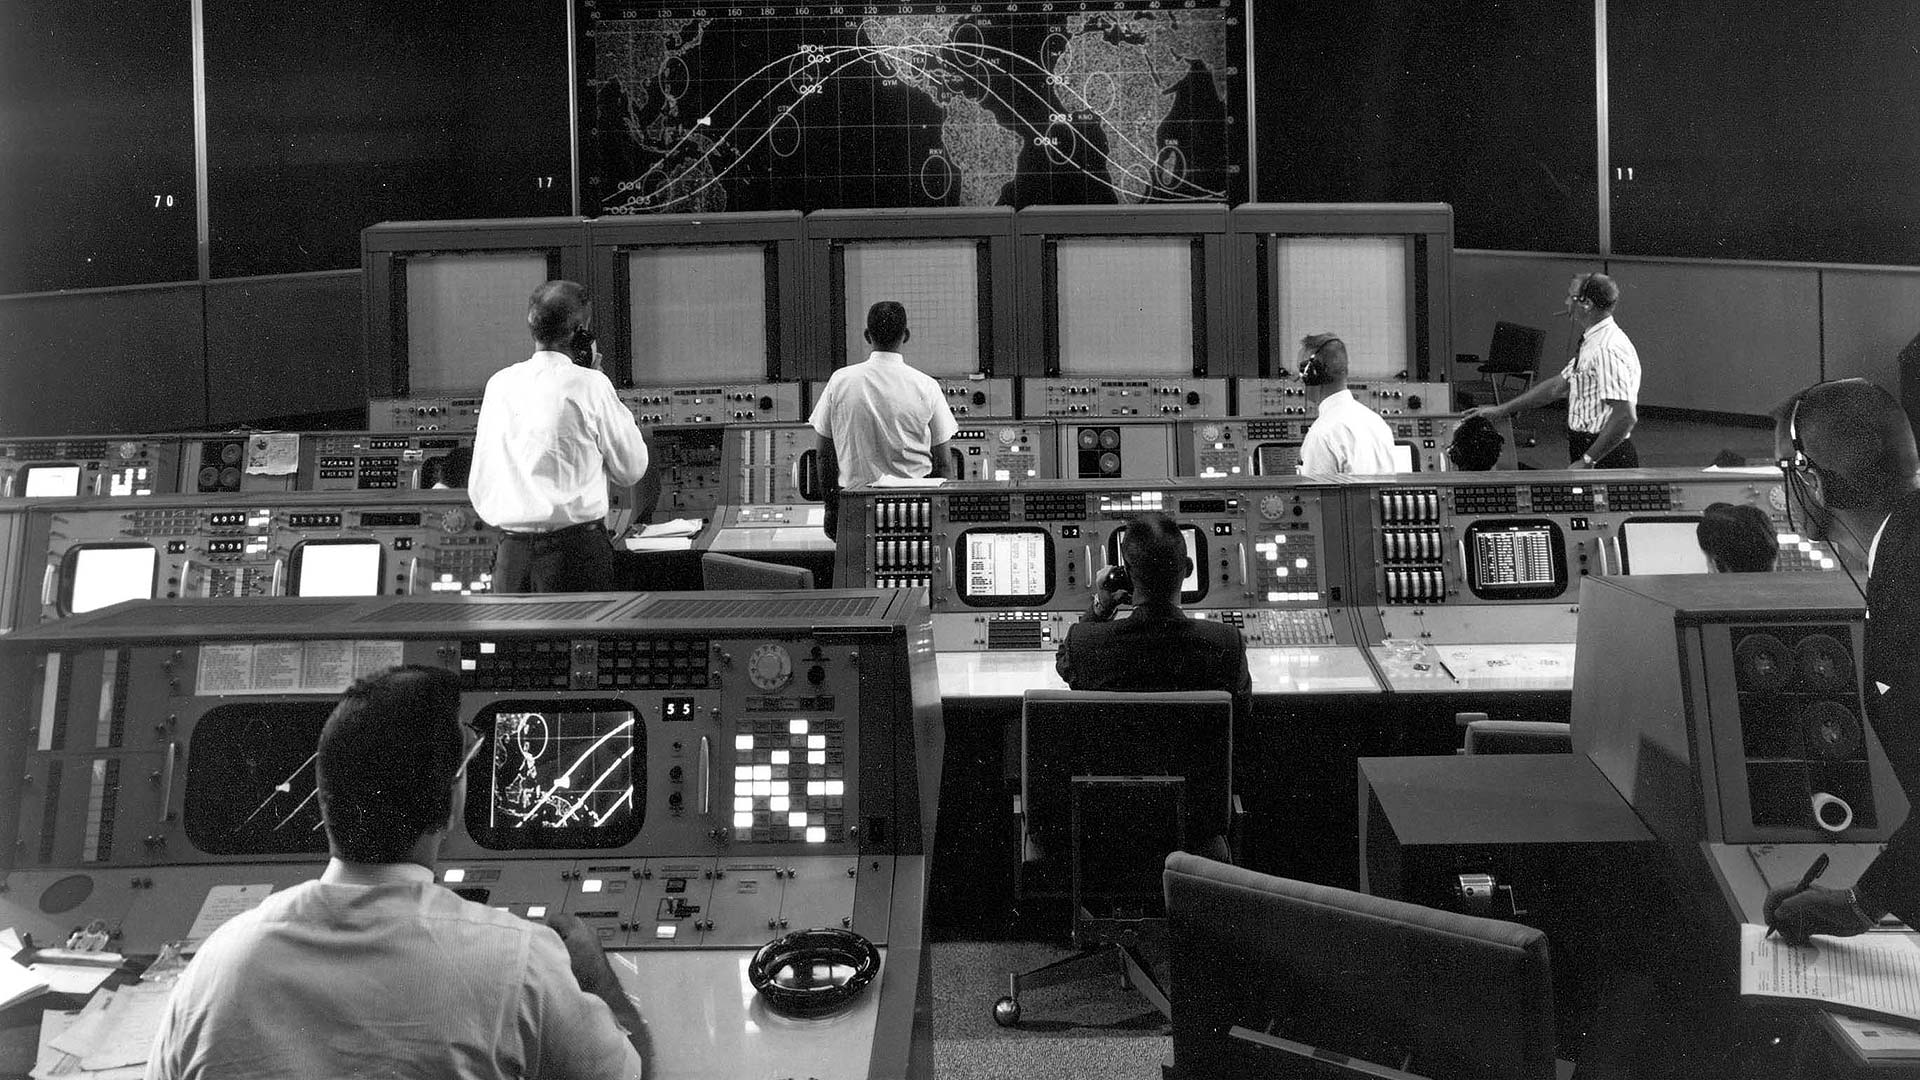 Houston Mission Control Gemini Plotter